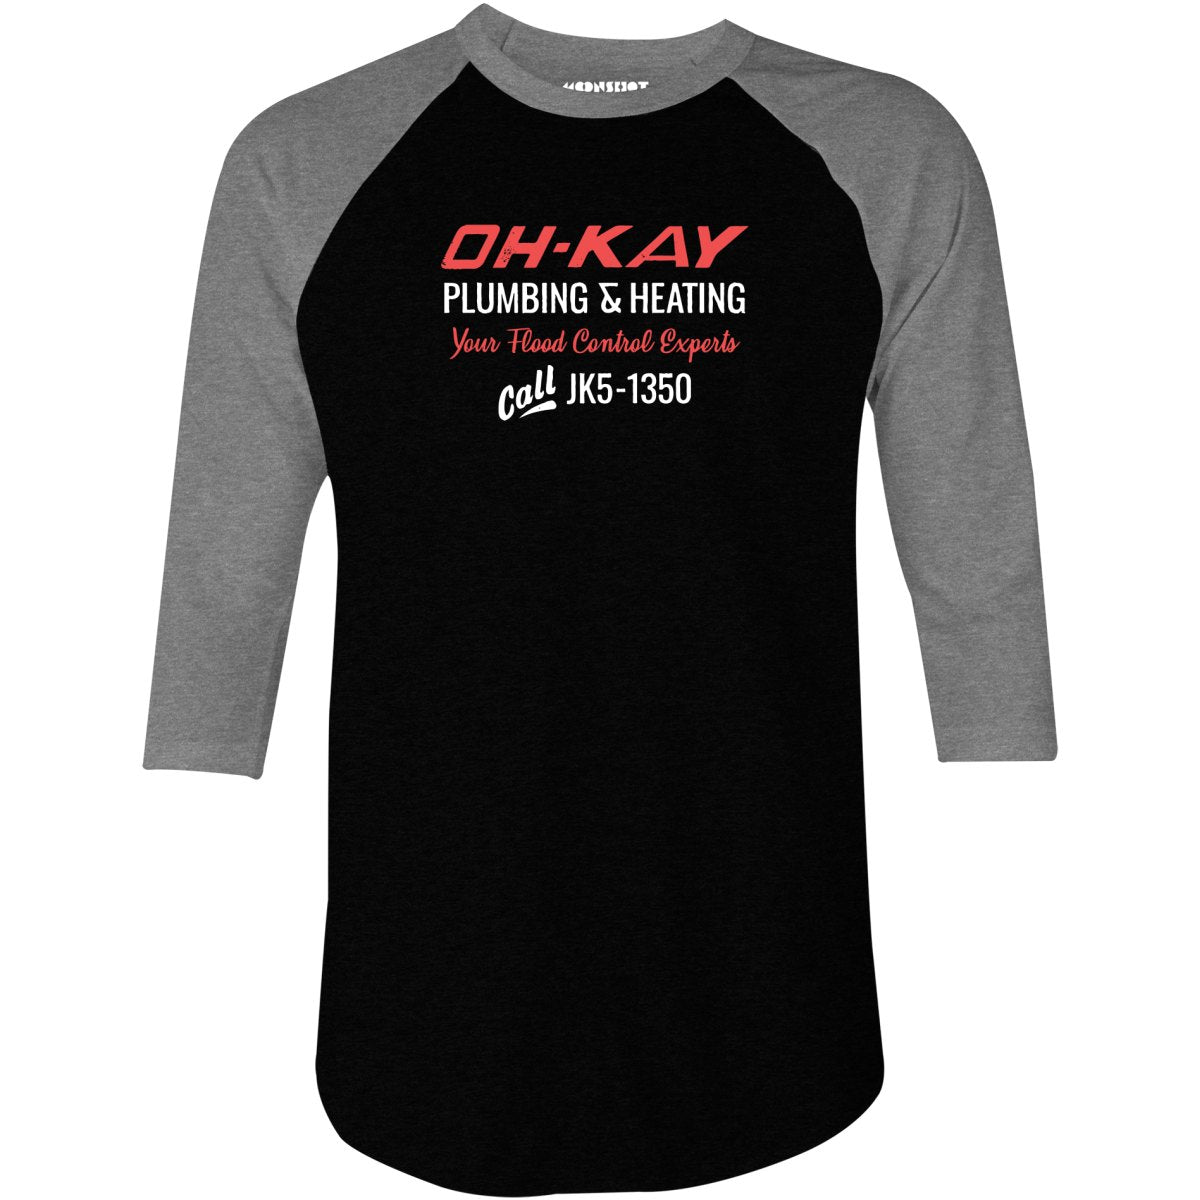 Oh-Kay Plumbing & Heating - 3/4 Sleeve Raglan T-Shirt